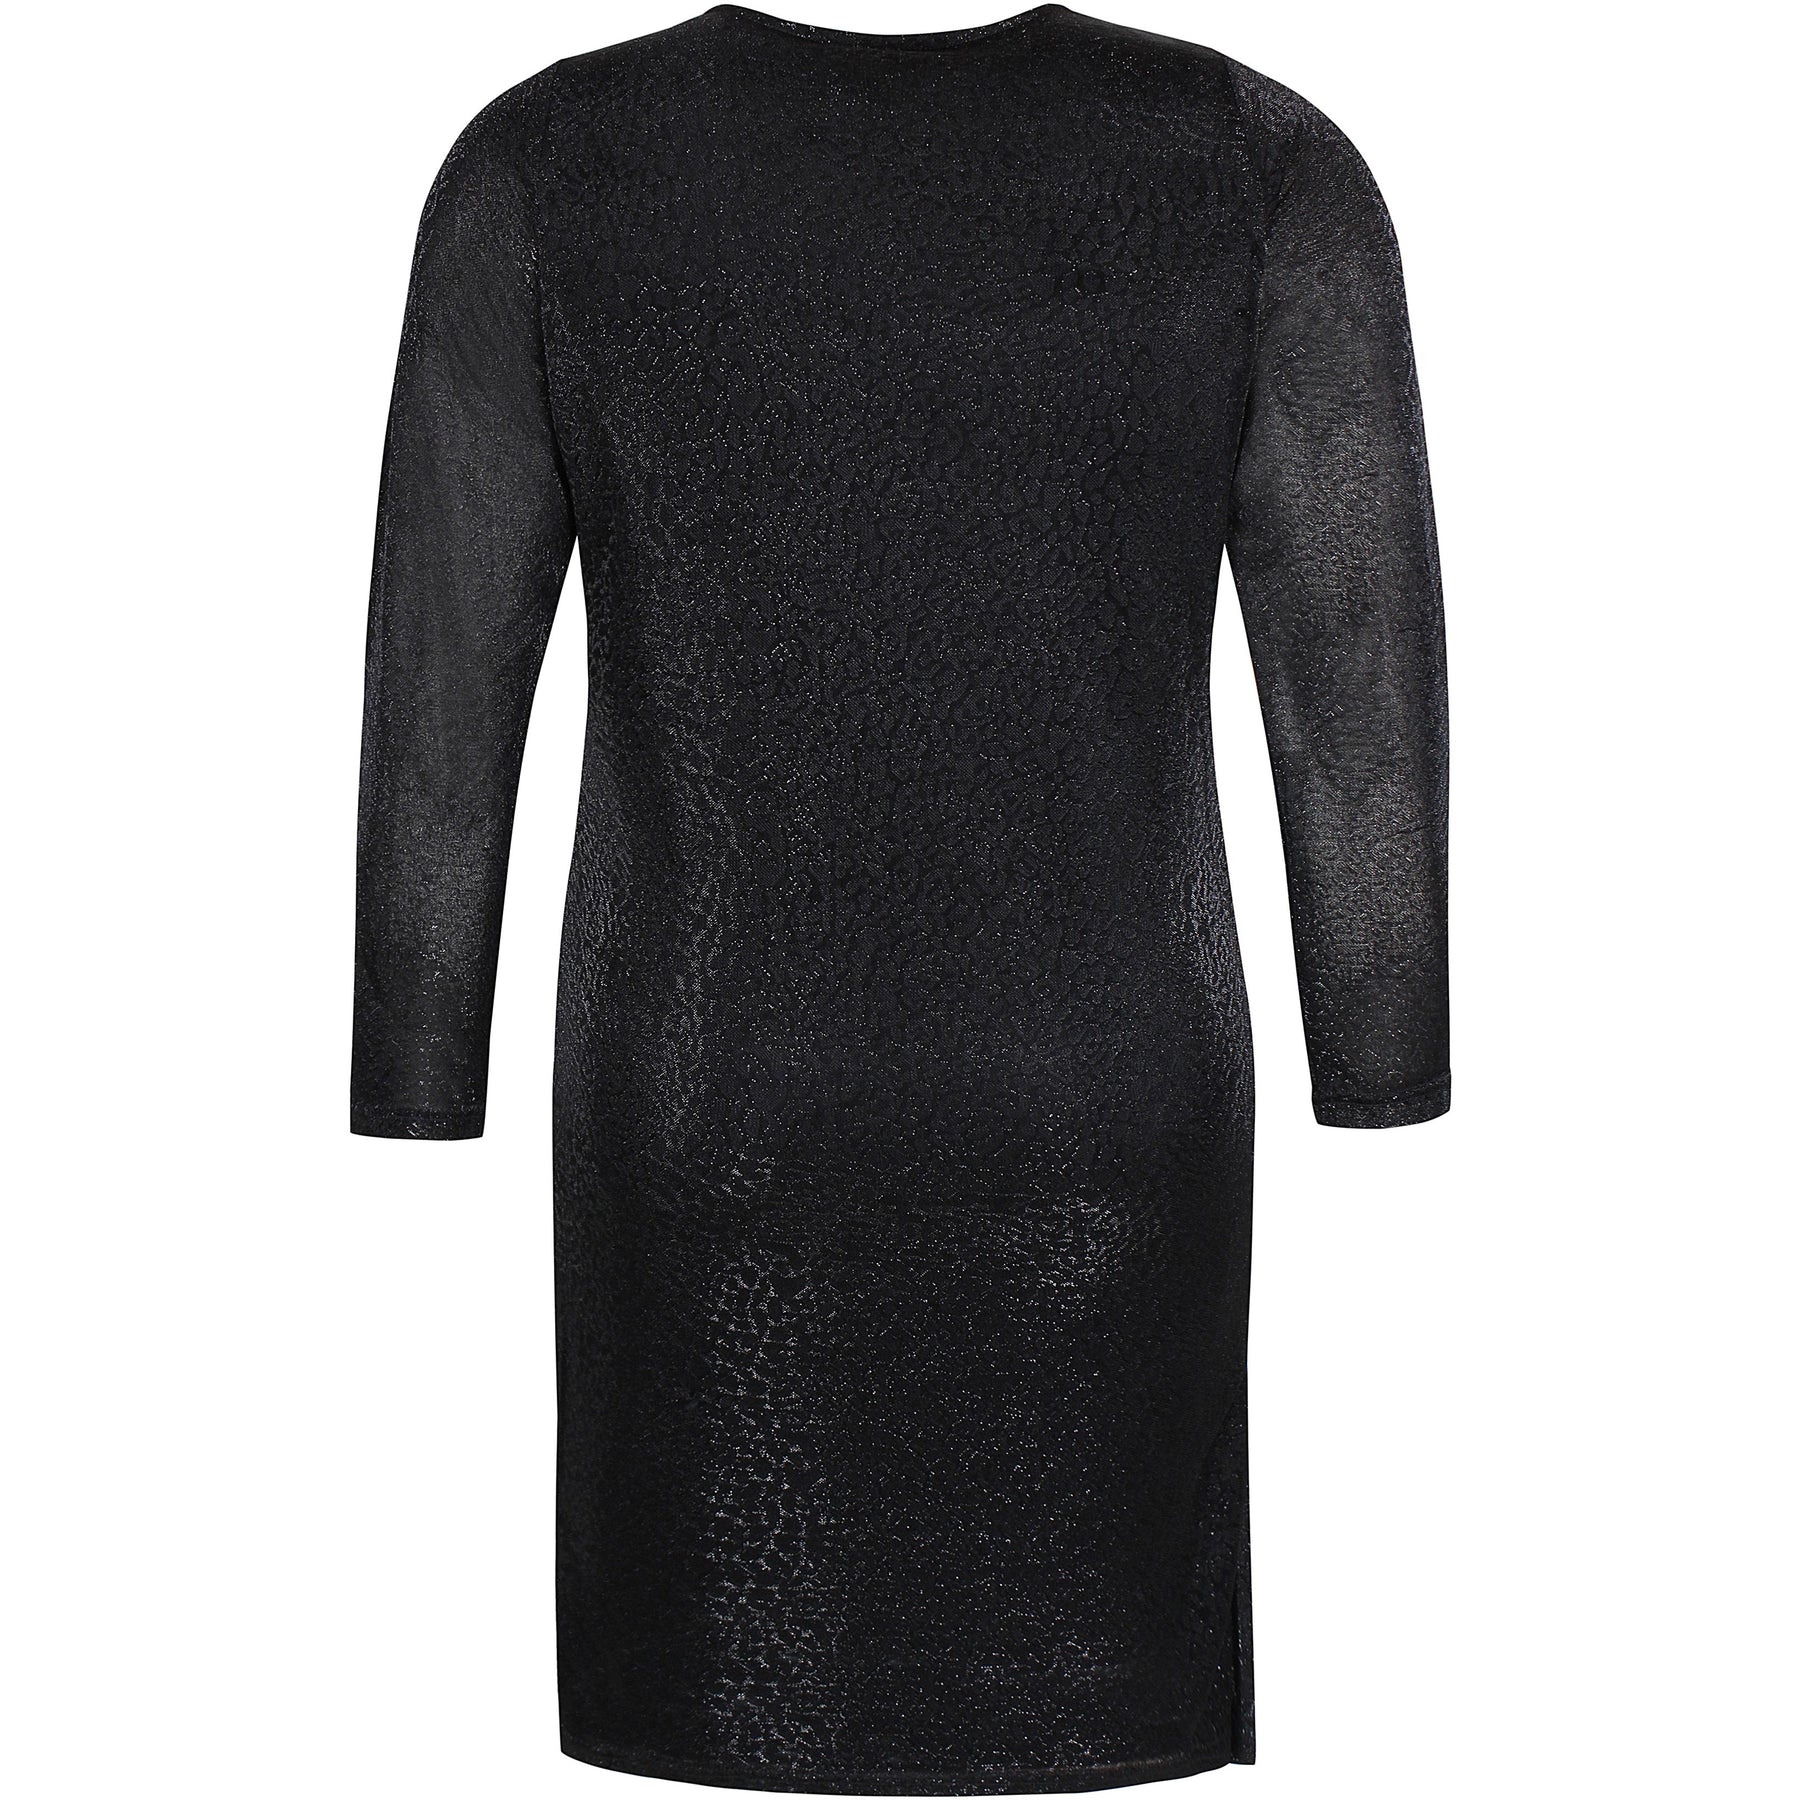 Zhenzi Jacquard Dress in Black - Wardrobe Plus